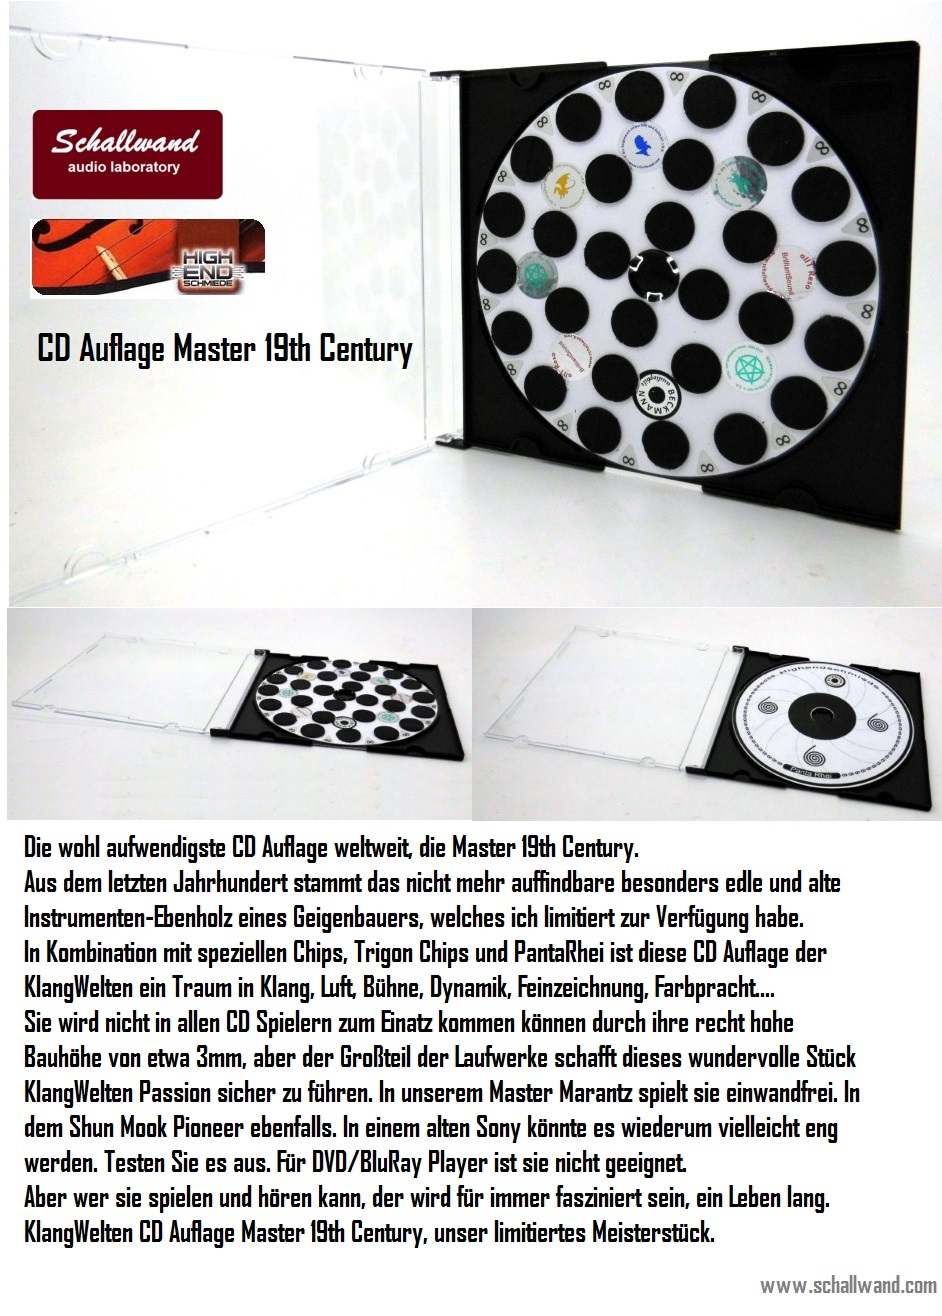 CD_Auflage_Master_19th_Century_limited_Schallwand_audio_laboratory